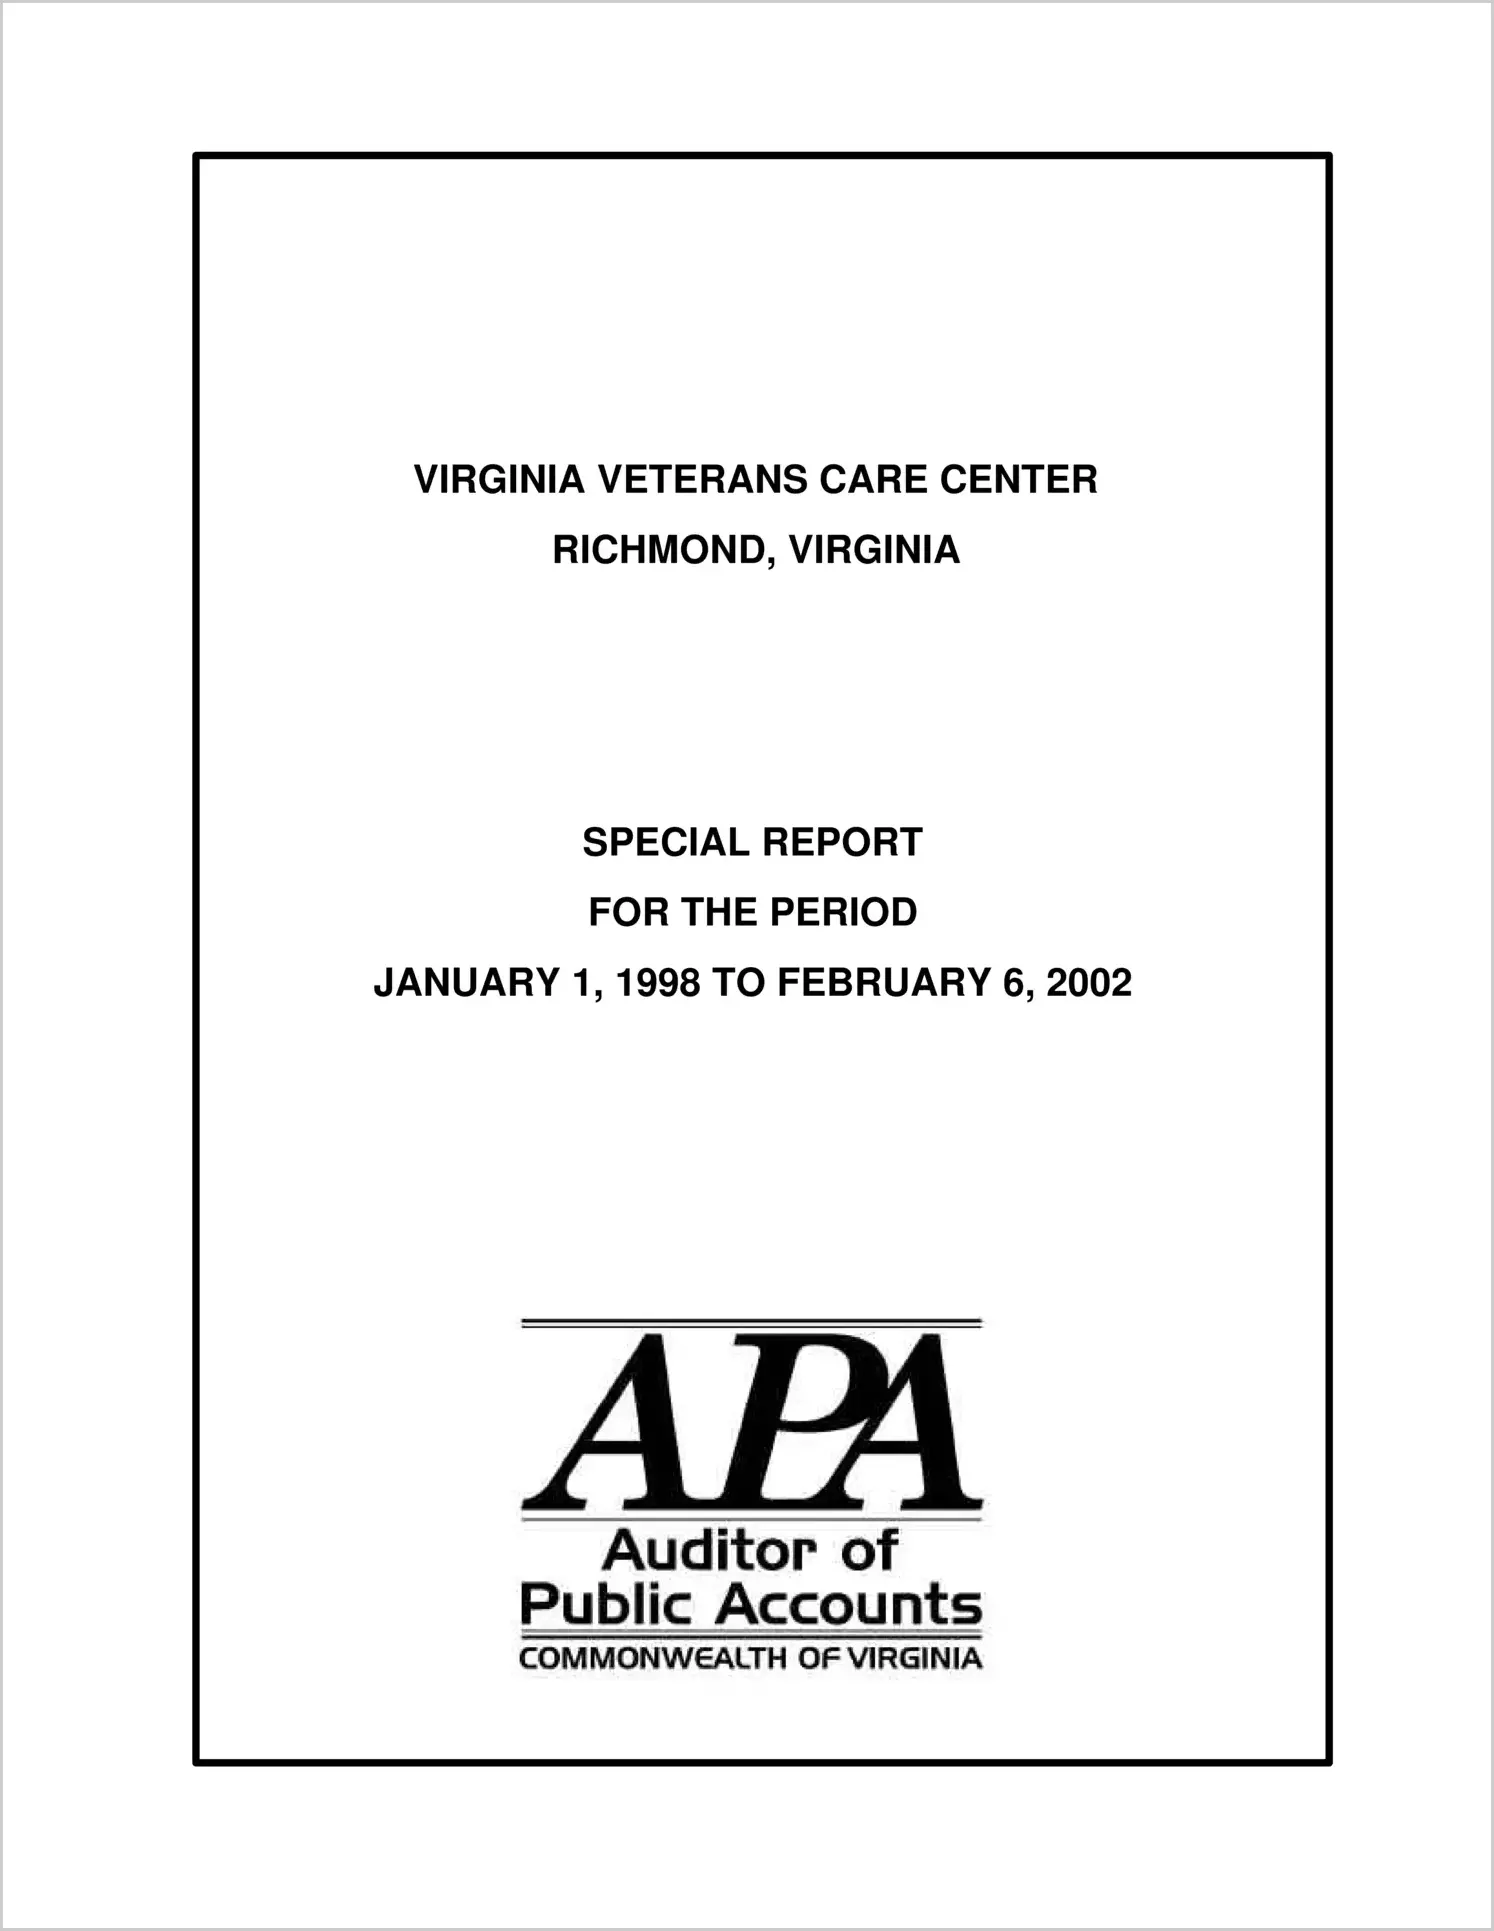 Special ReportVirginia Veterans Care Center(Report Period: 1/1/1998-2/6/2002)